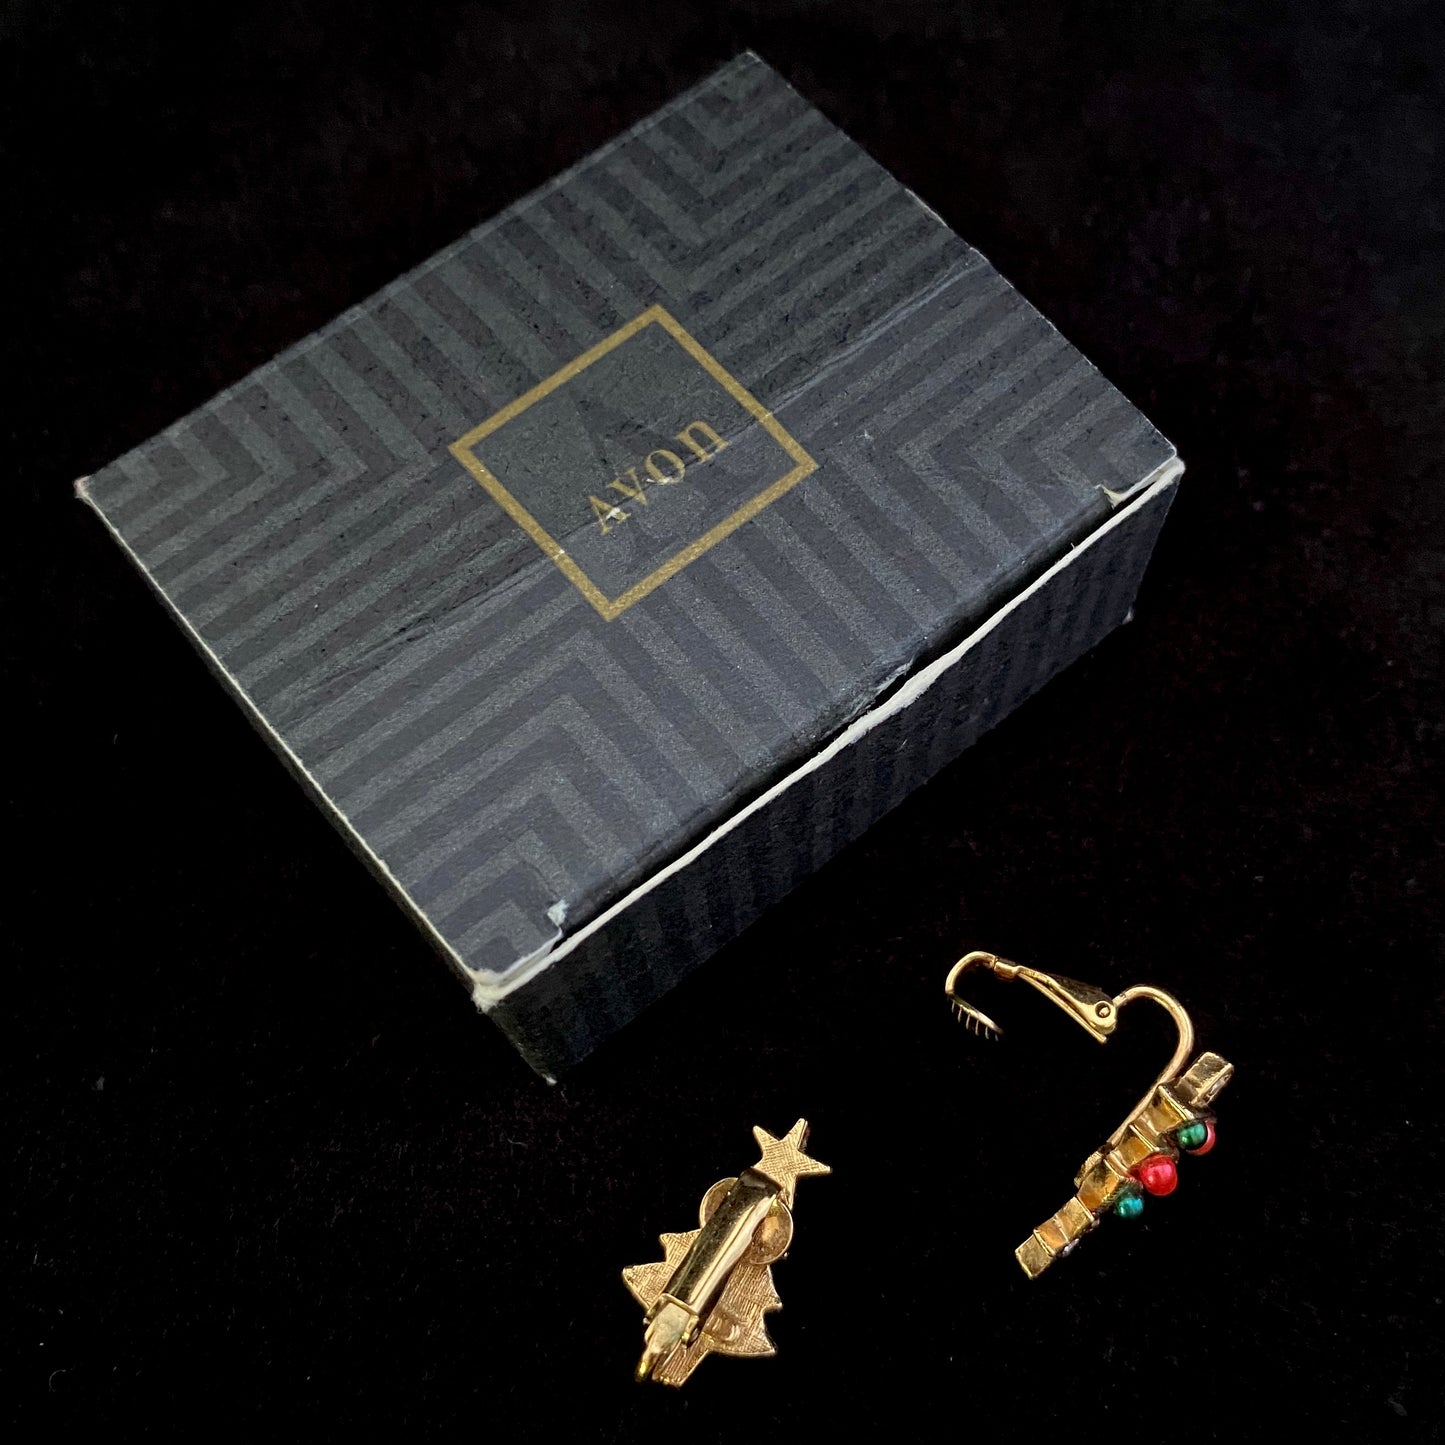 1995 Avon Colorful Christmas Tree Earrings - Retro Kandy Vintage